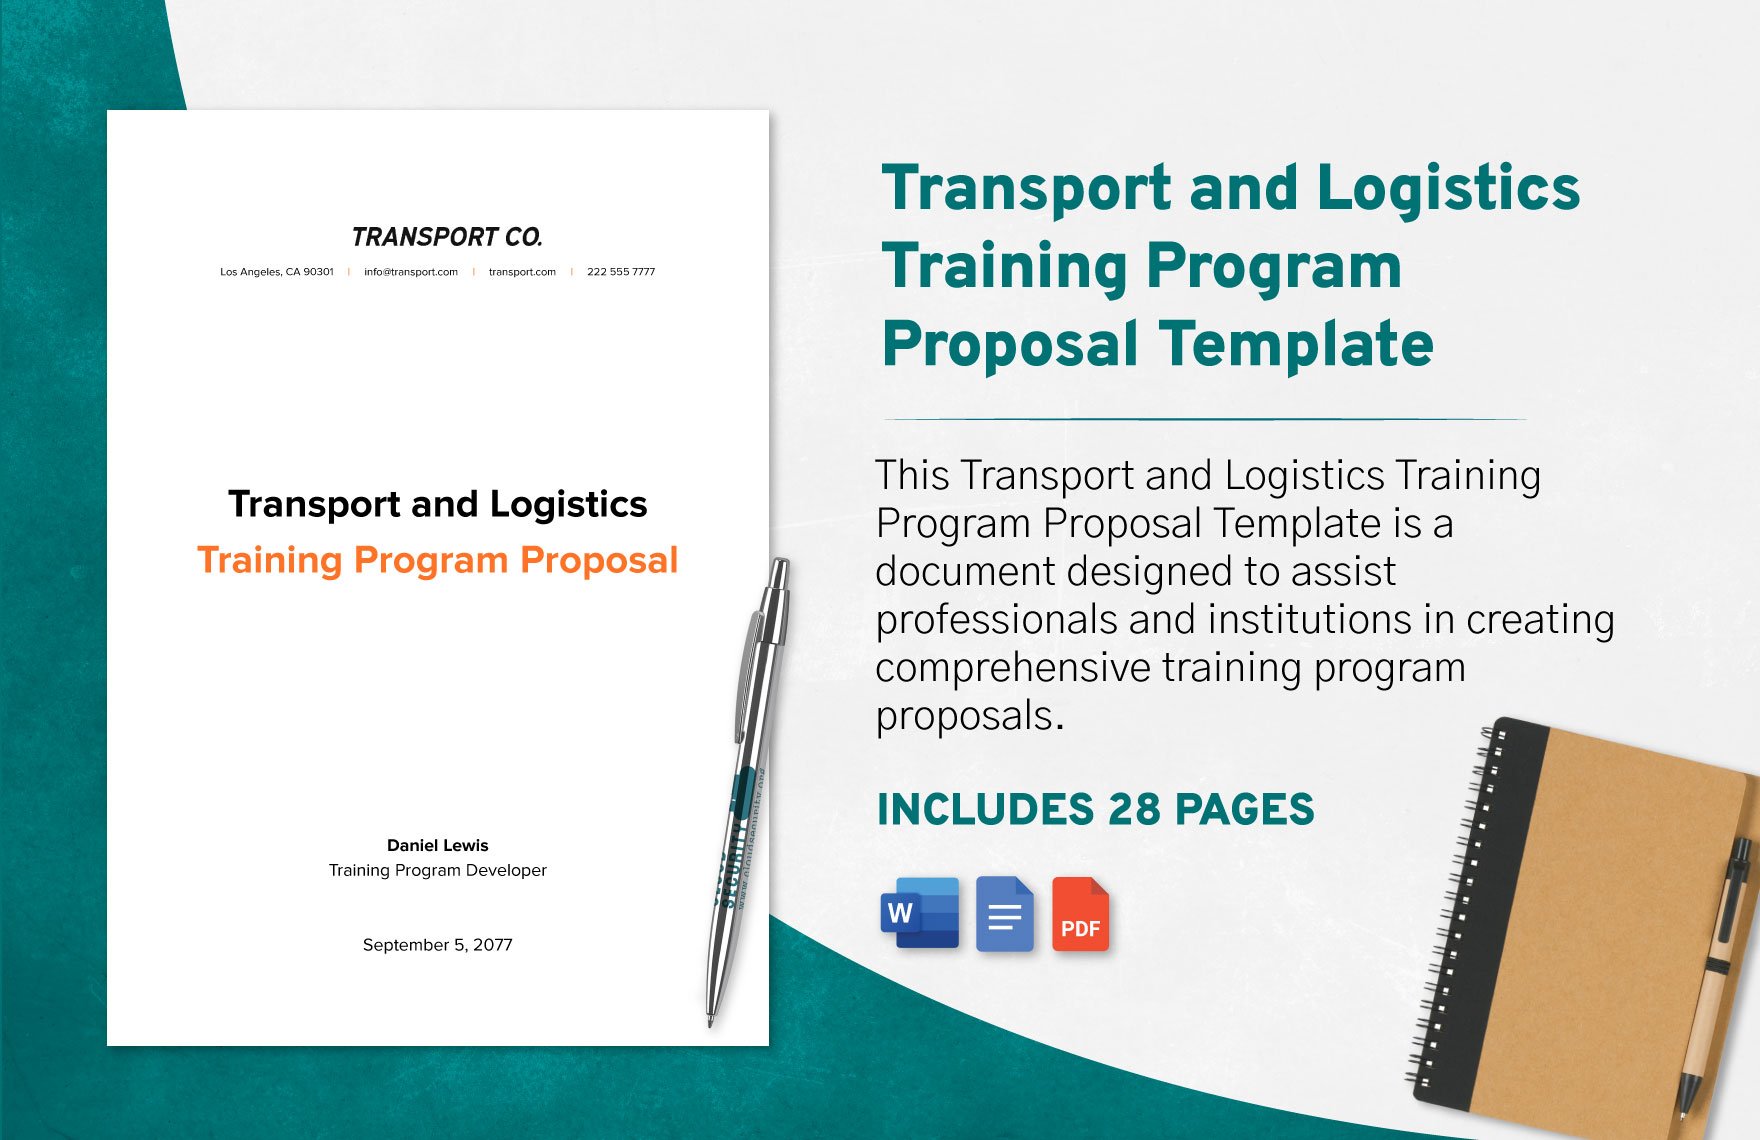 Transport and Logistics Training Program Proposal Template